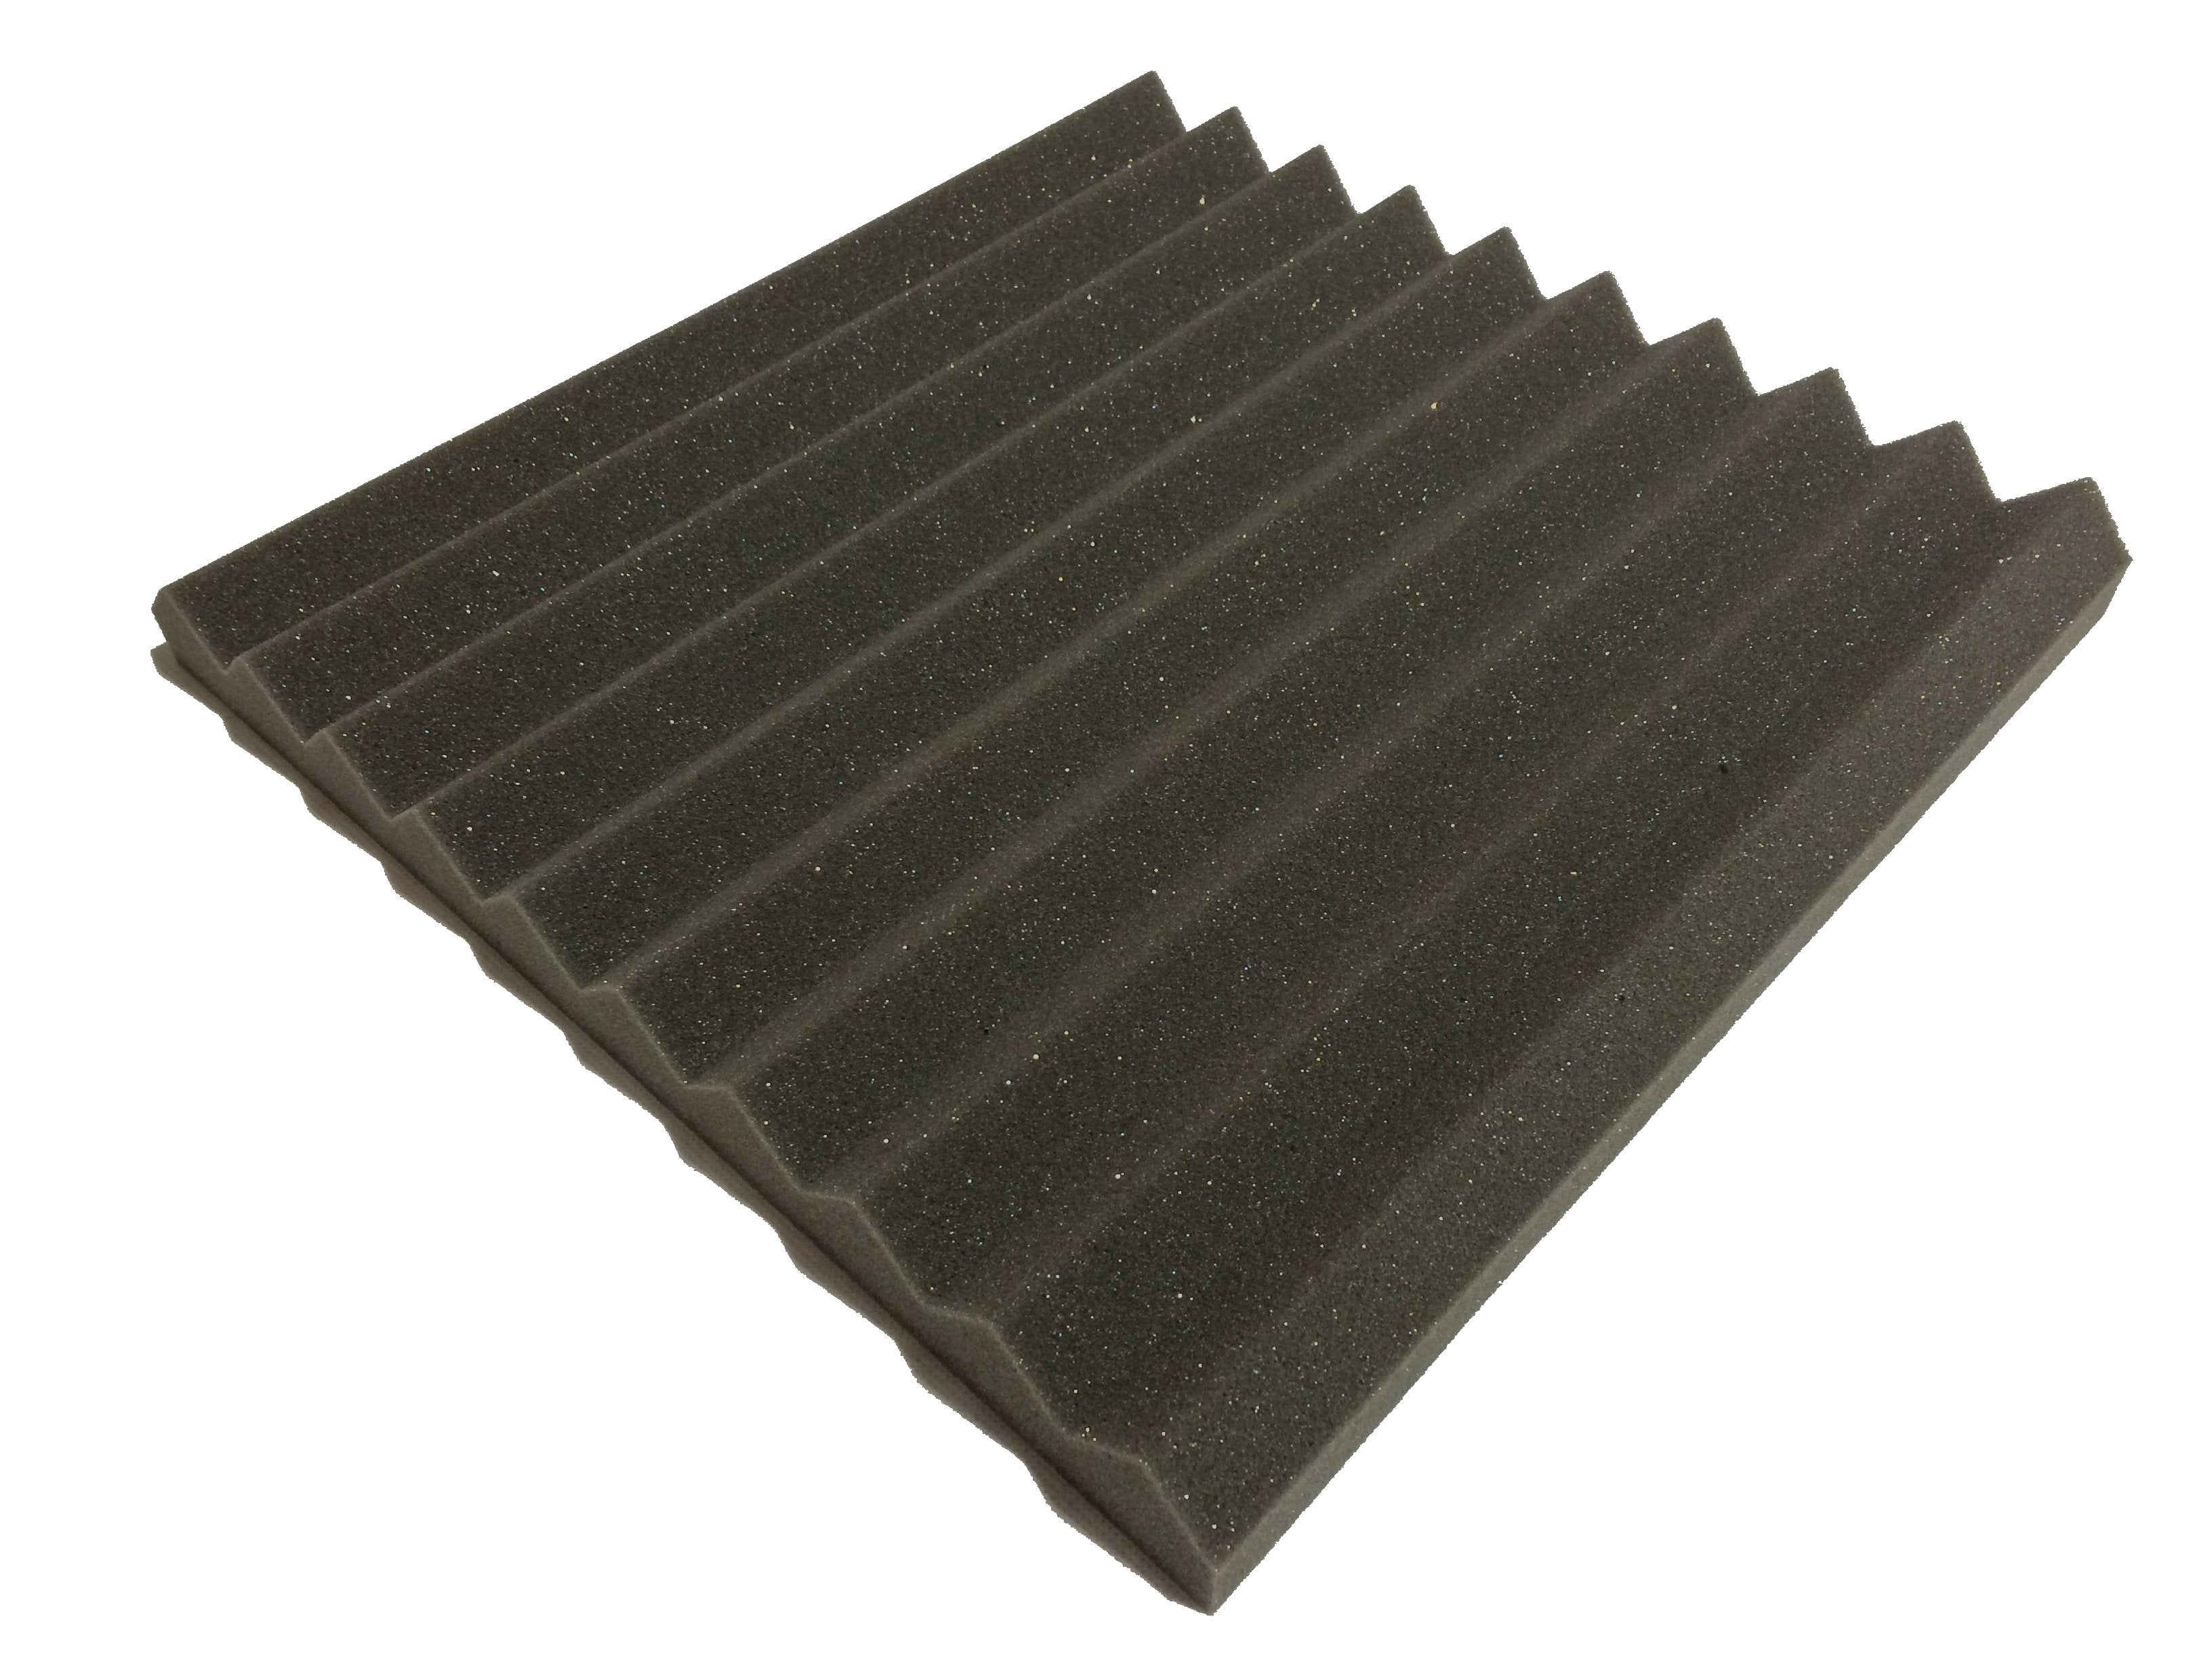 Euphonic Wedge Standard Acoustic Studio Foam Tile Pack - Advanced Acoustics